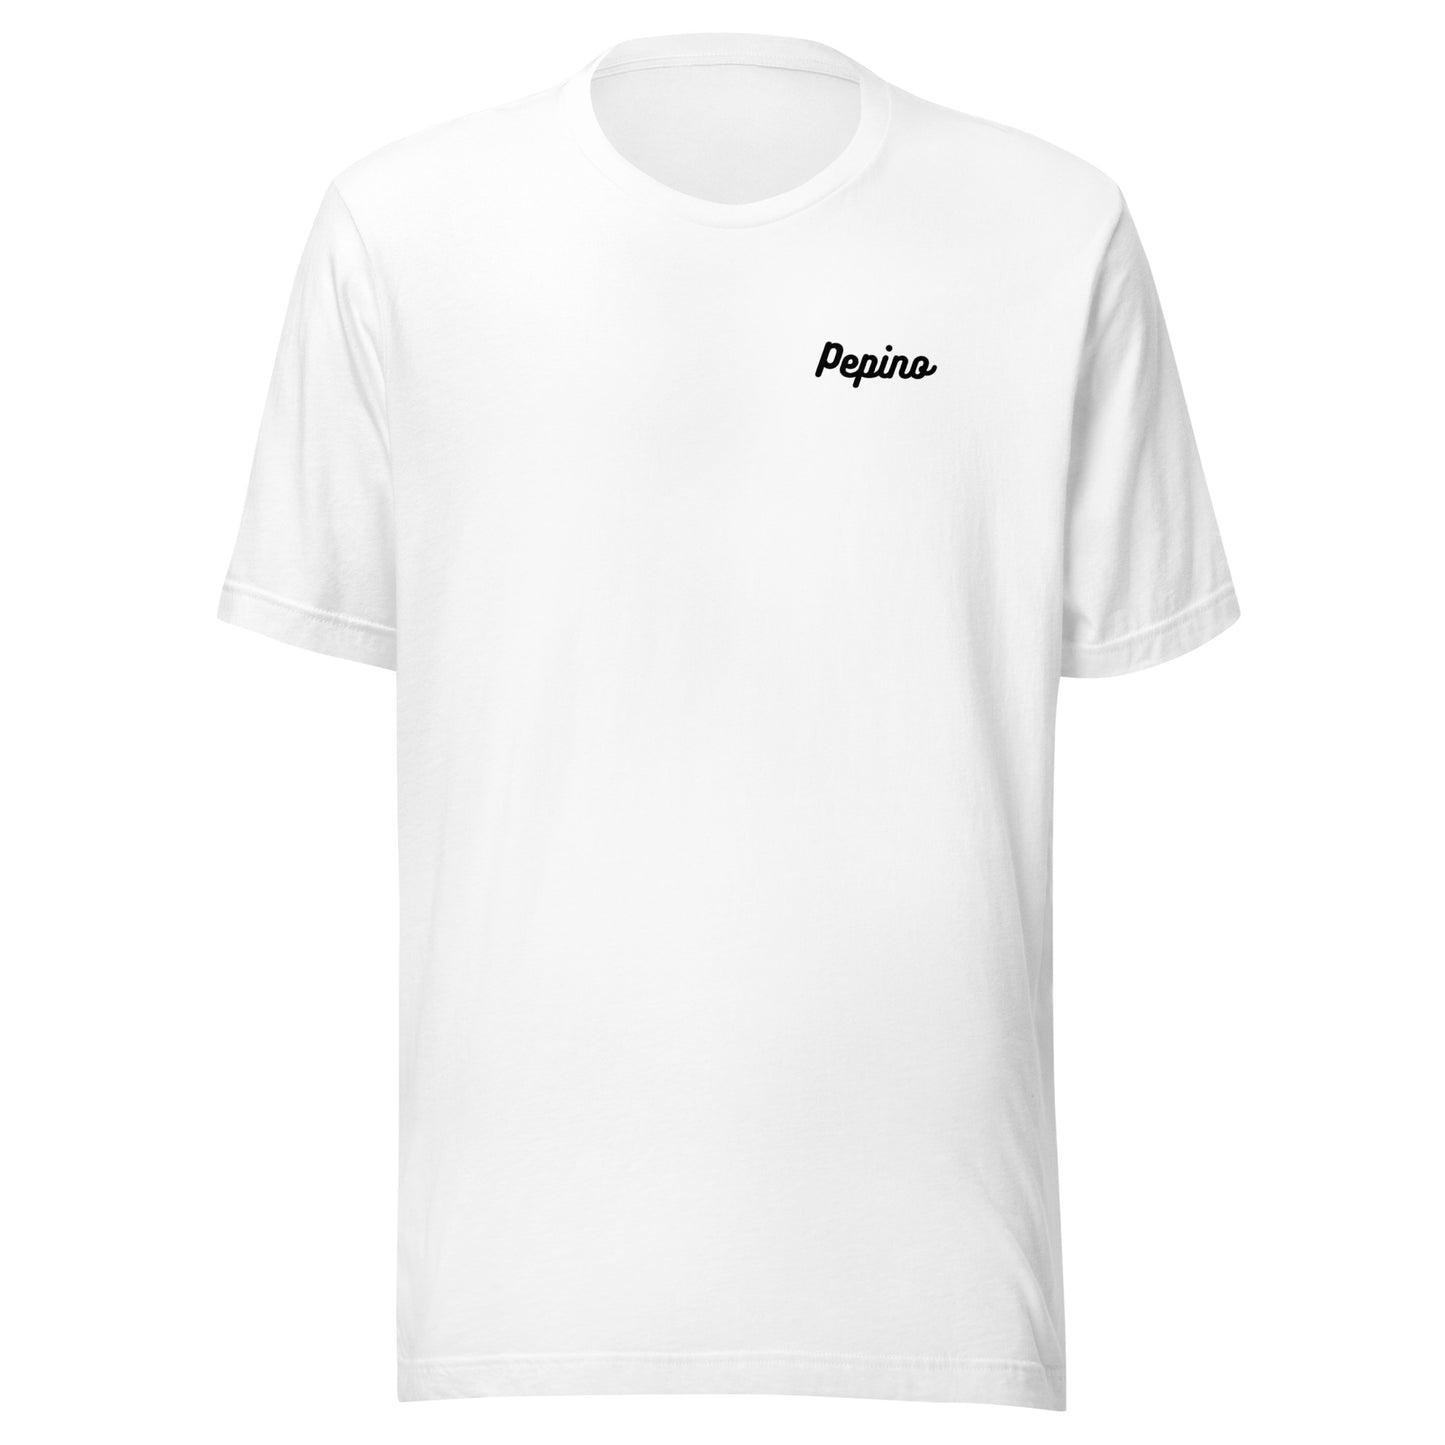 El Pepino, Unisex t-shirt